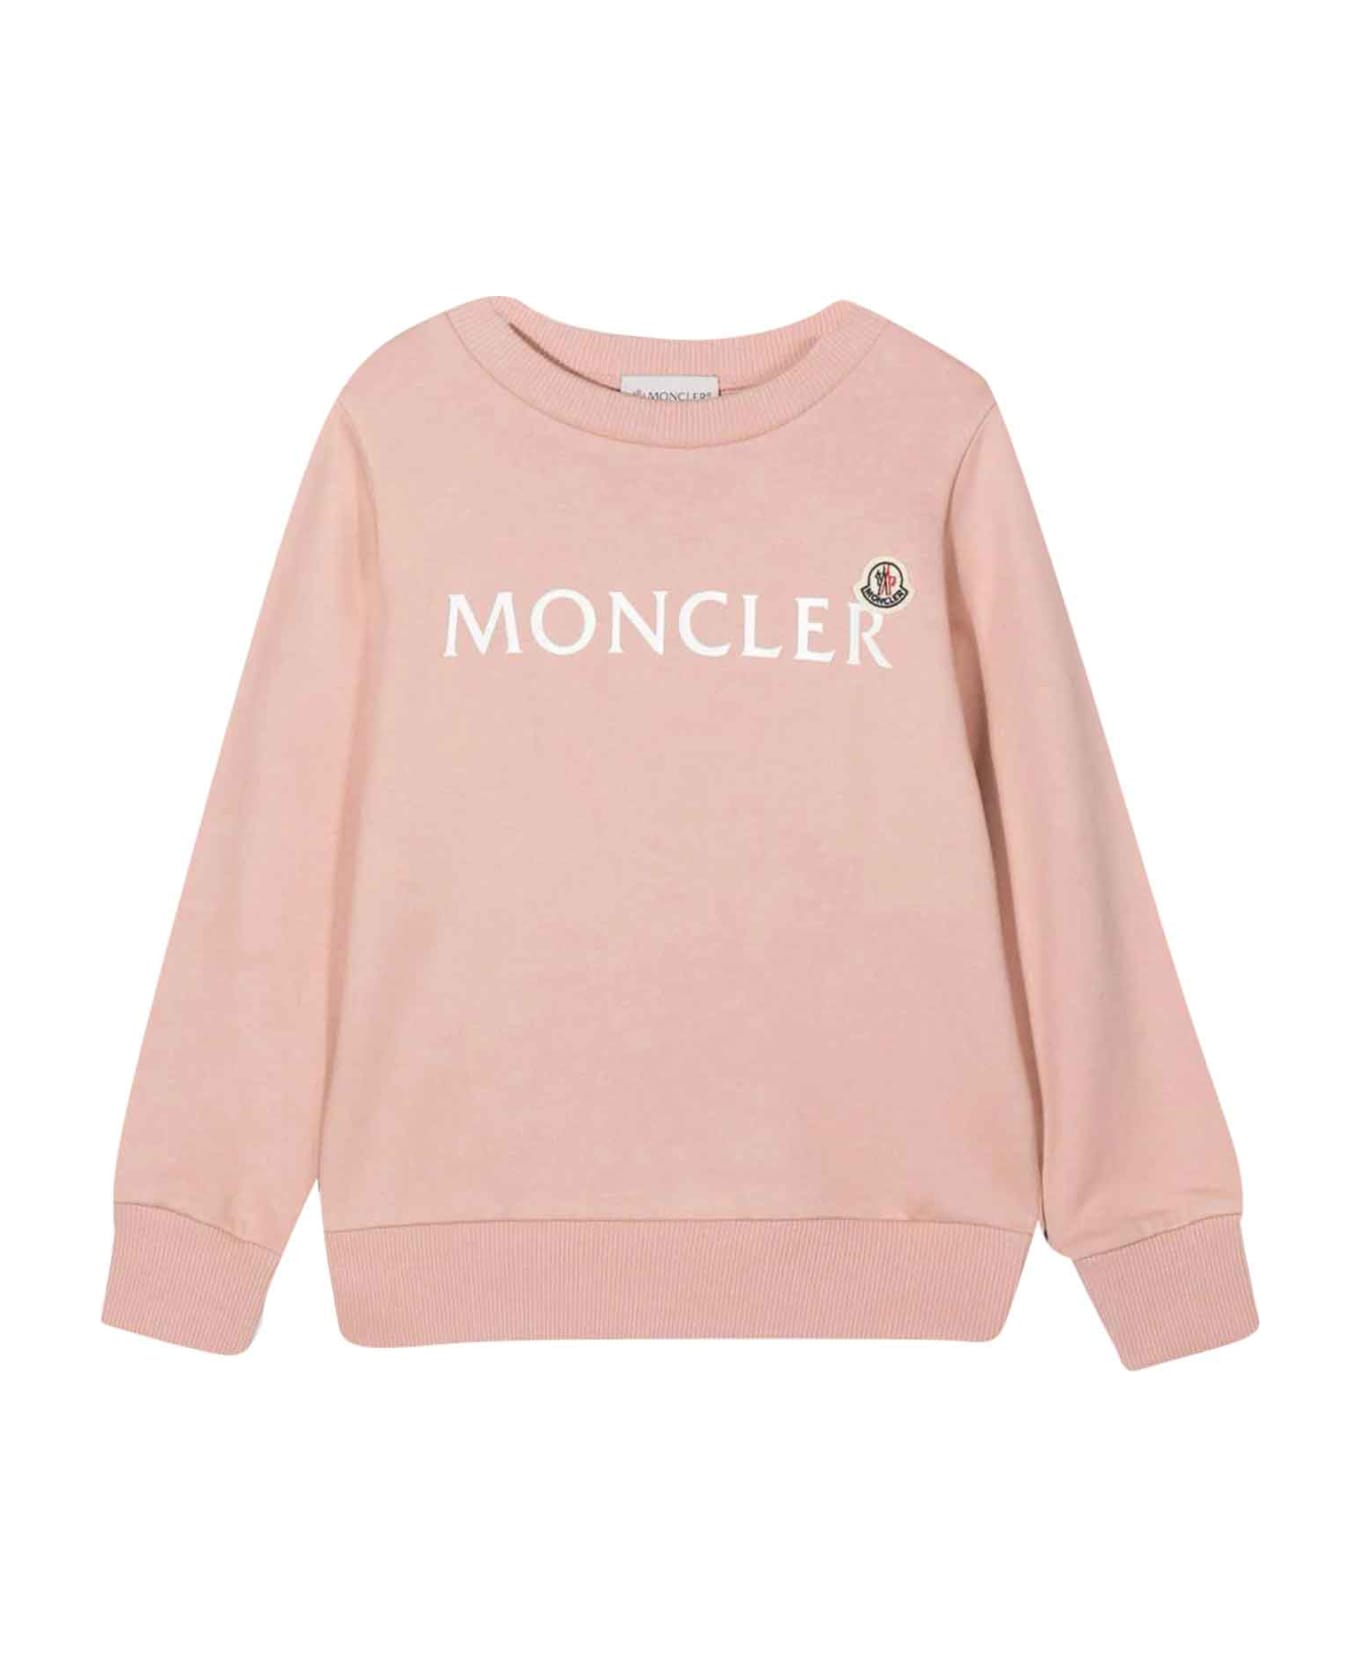 Moncler Pink Sweatshirt Unisex - Rosa